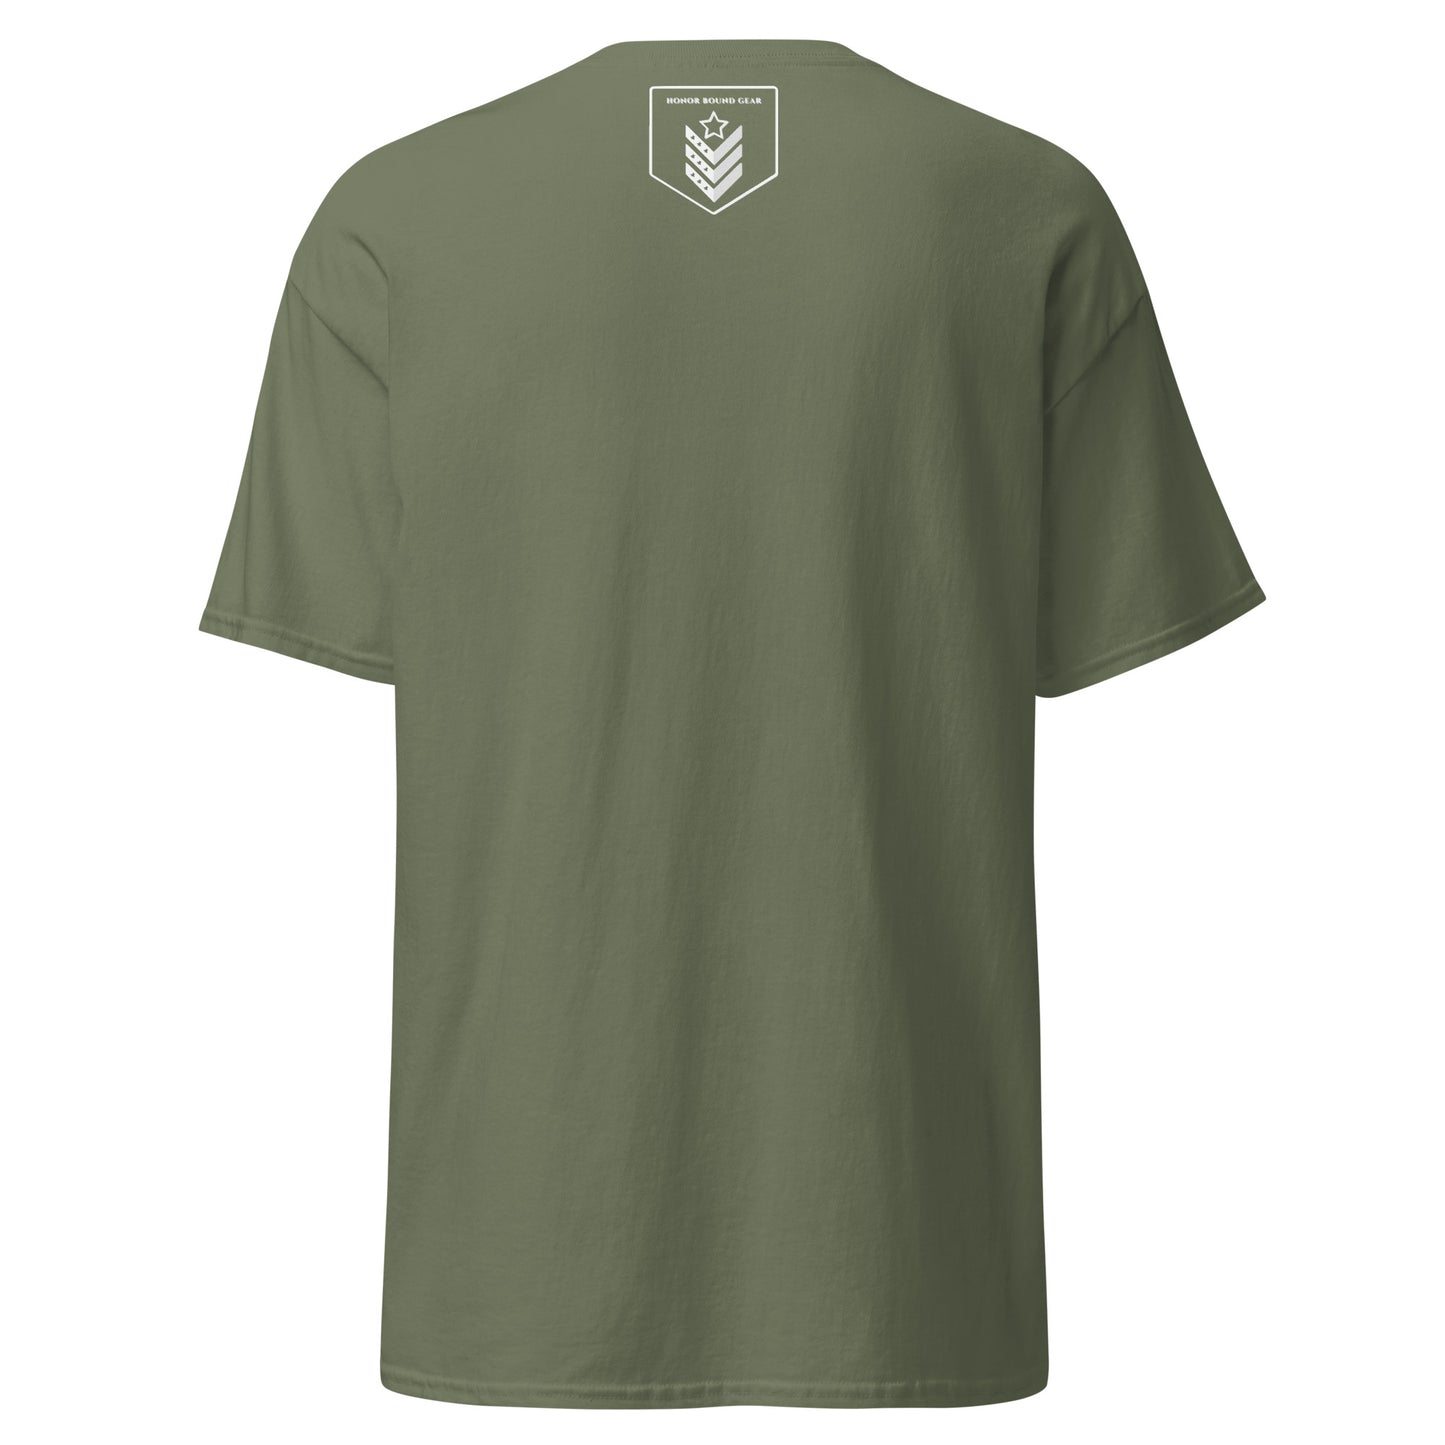 HBG "Proud Veteran" Men's T-Shirt